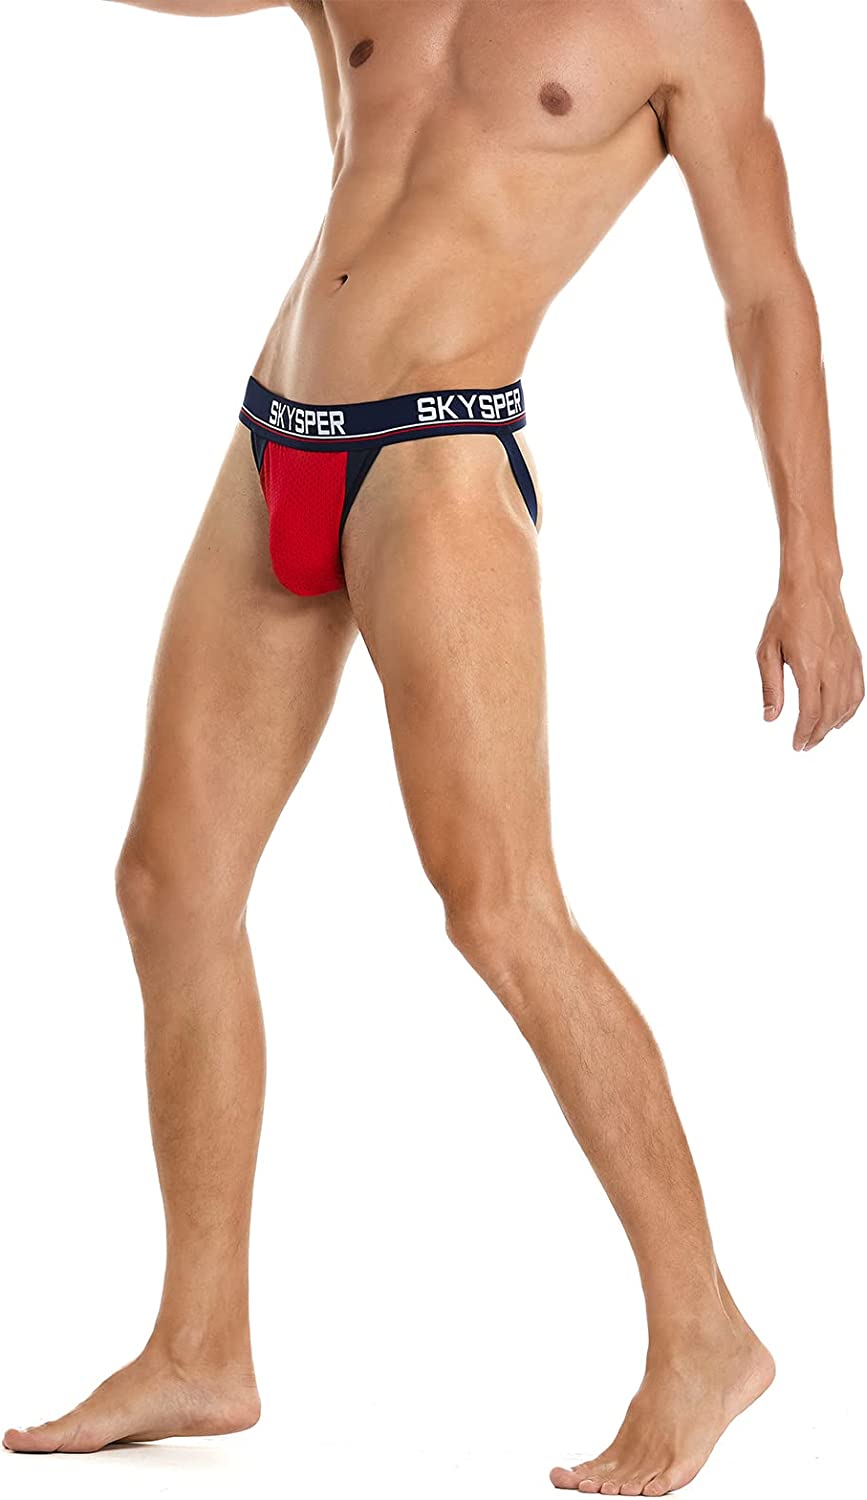 SKYSPER 34SK - Men's Cotton Jockstrap Underwear Athletic Supporter